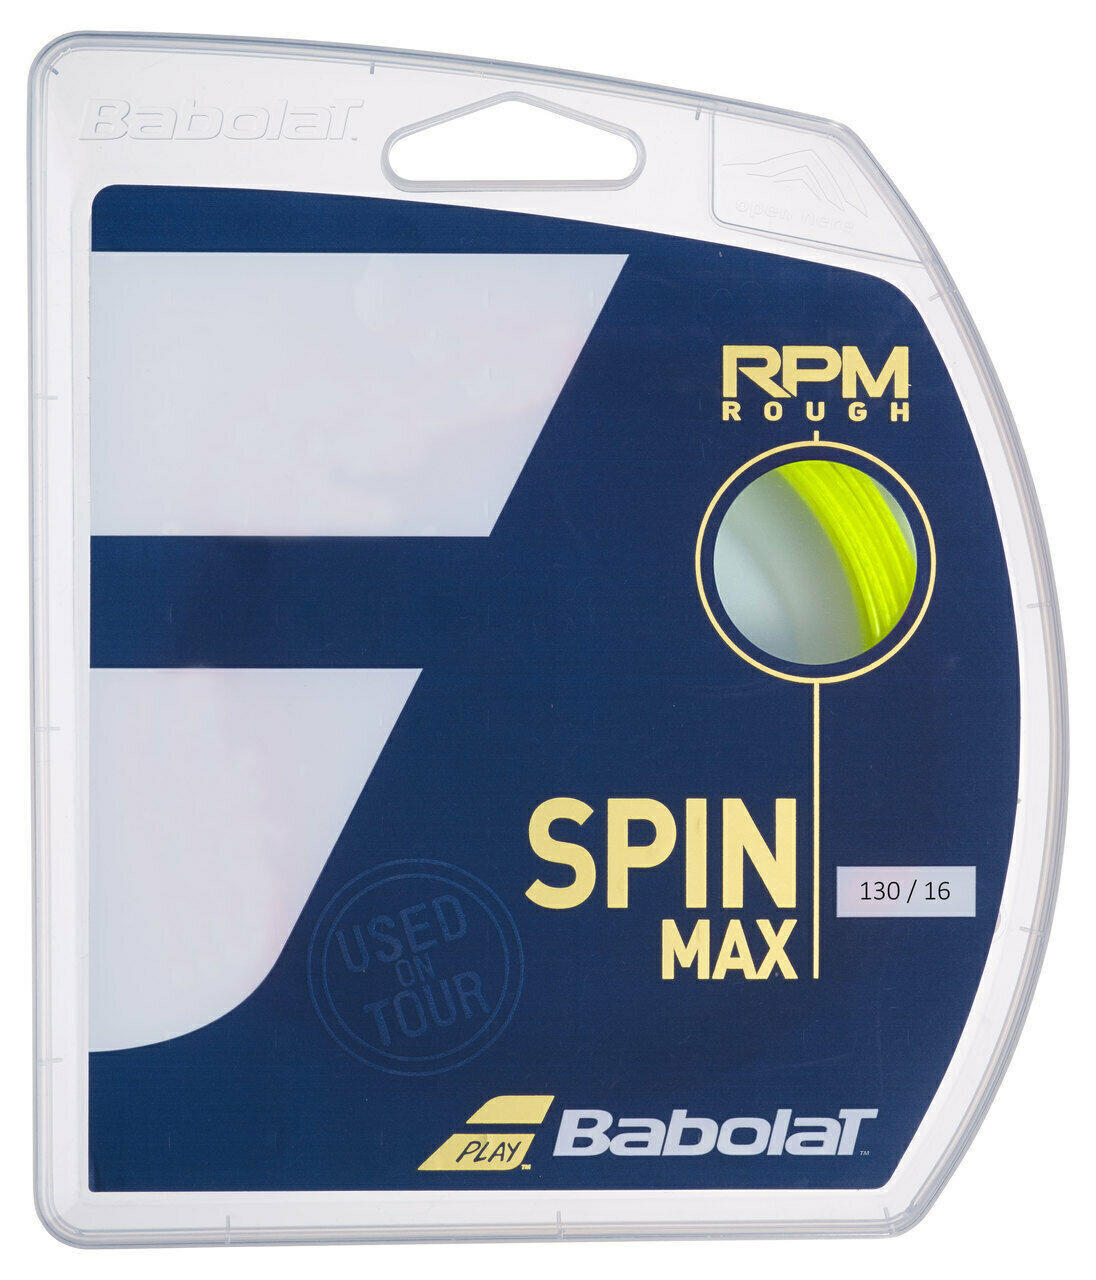 Babolat RPM Rough 130 Tennis String Set - Yellow